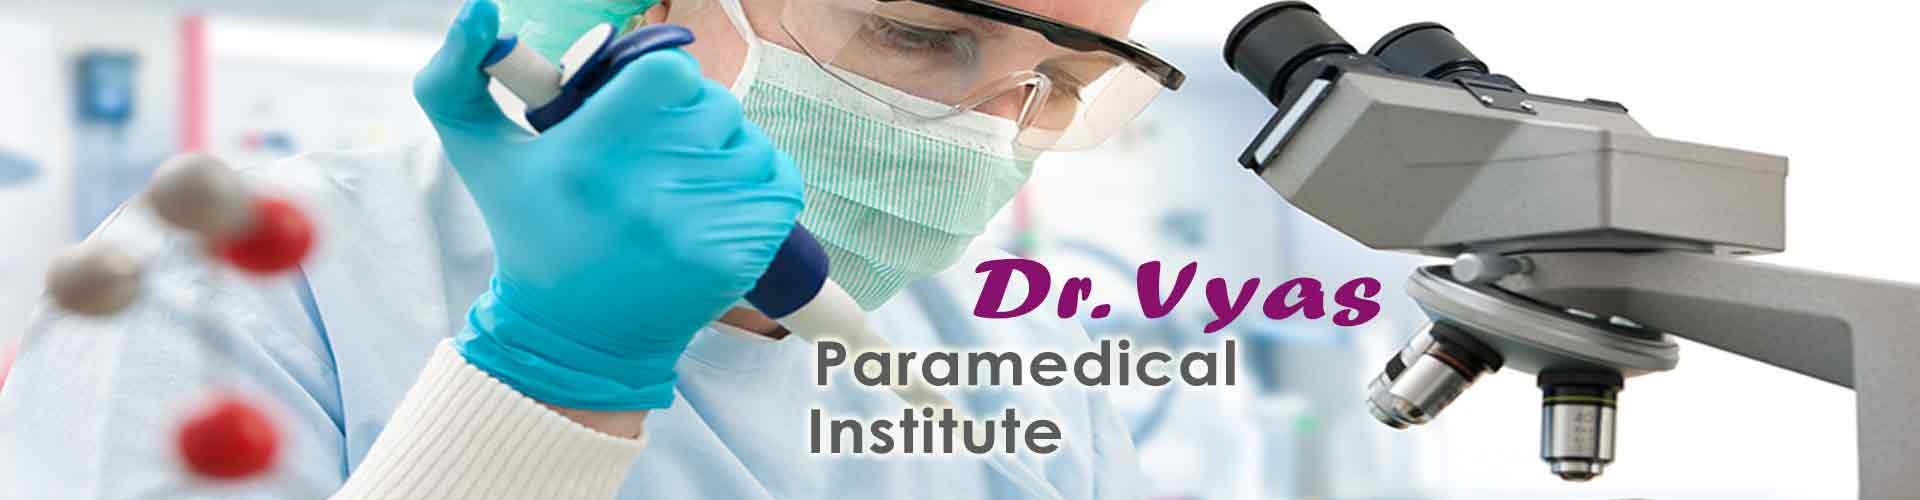 Dr Vyas Parameducal Institute